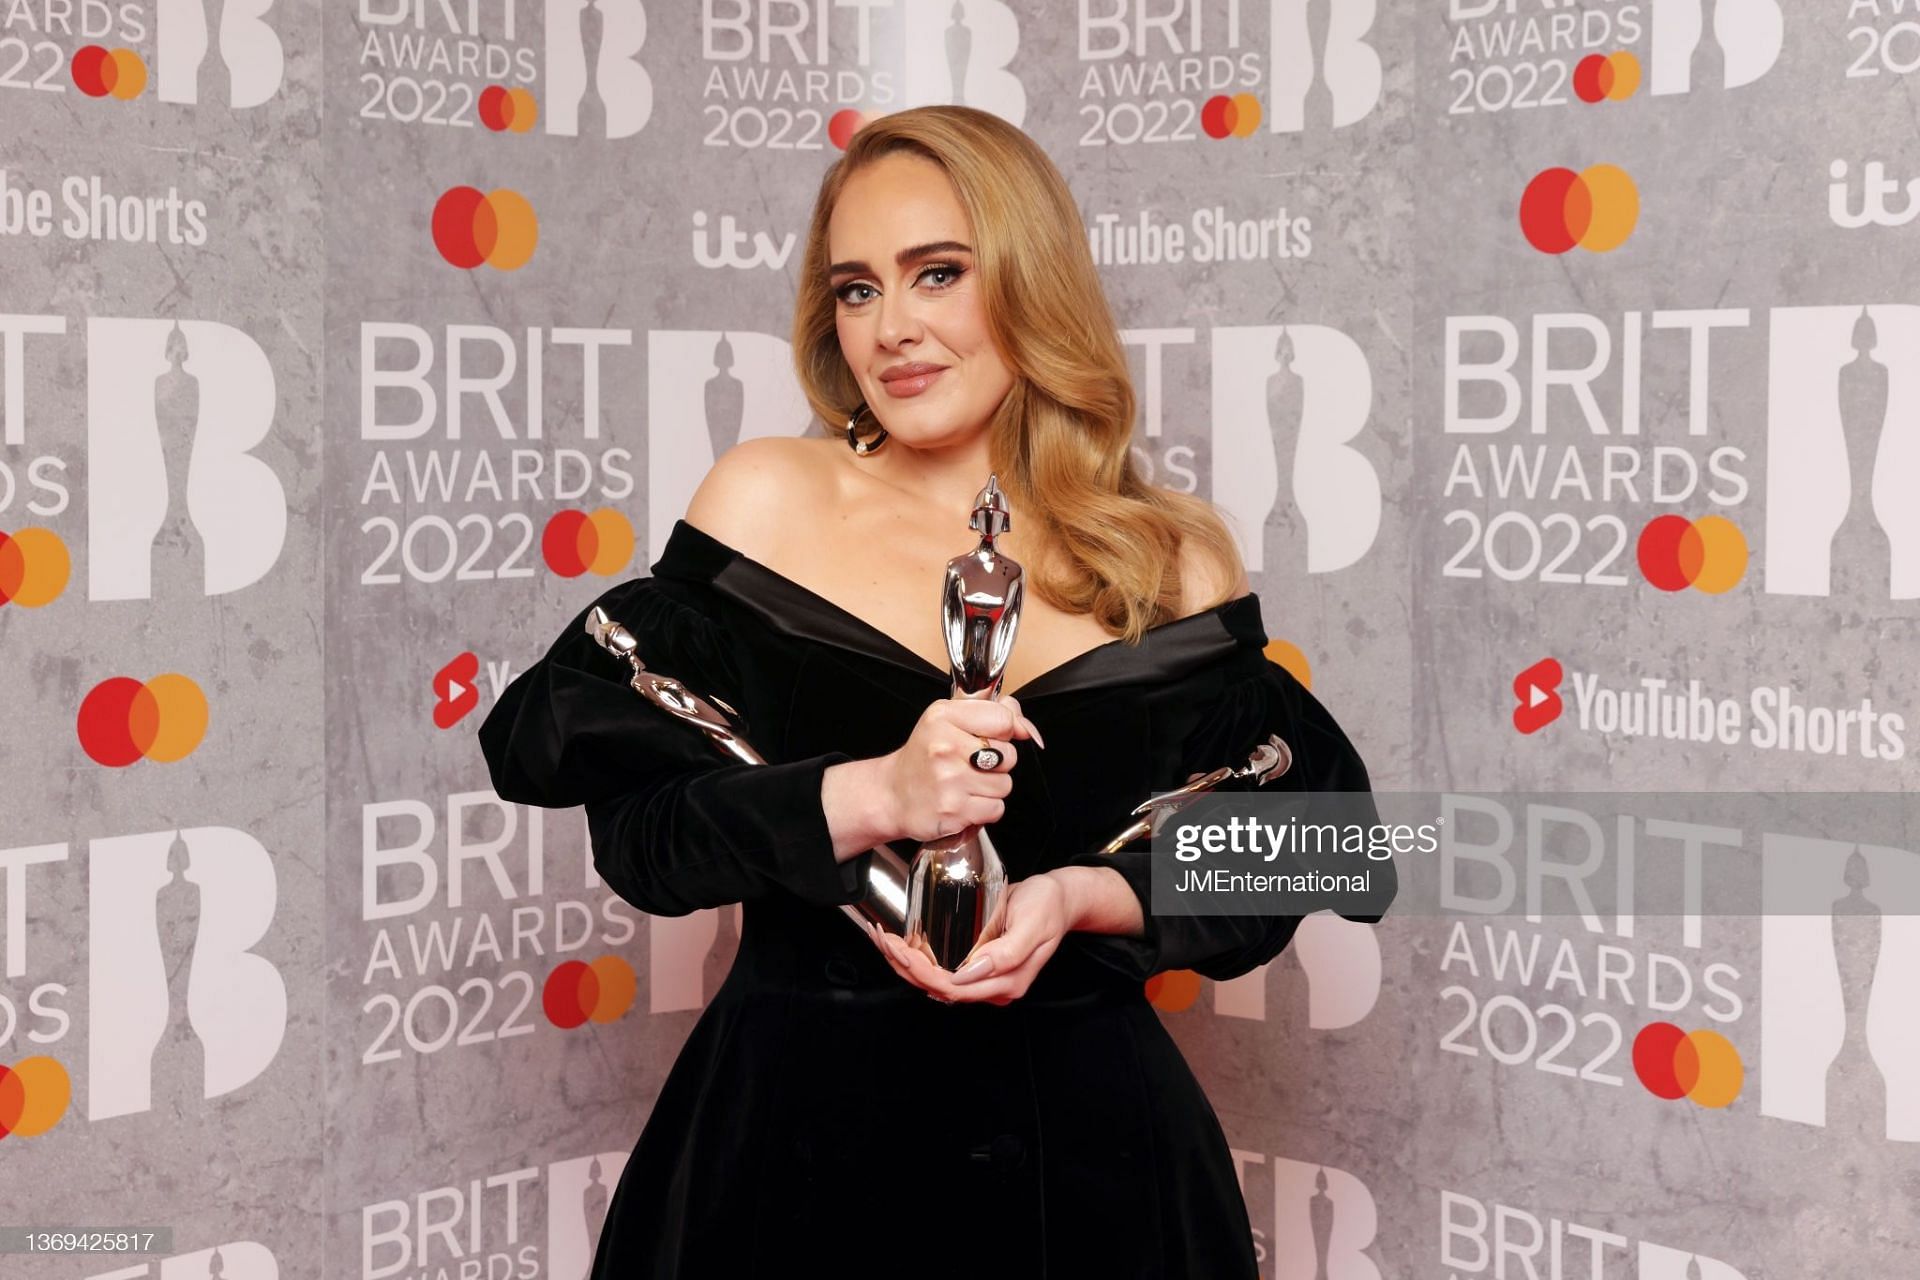 Winner: Adele at BRIT Awards 2022 (Image via Getty)